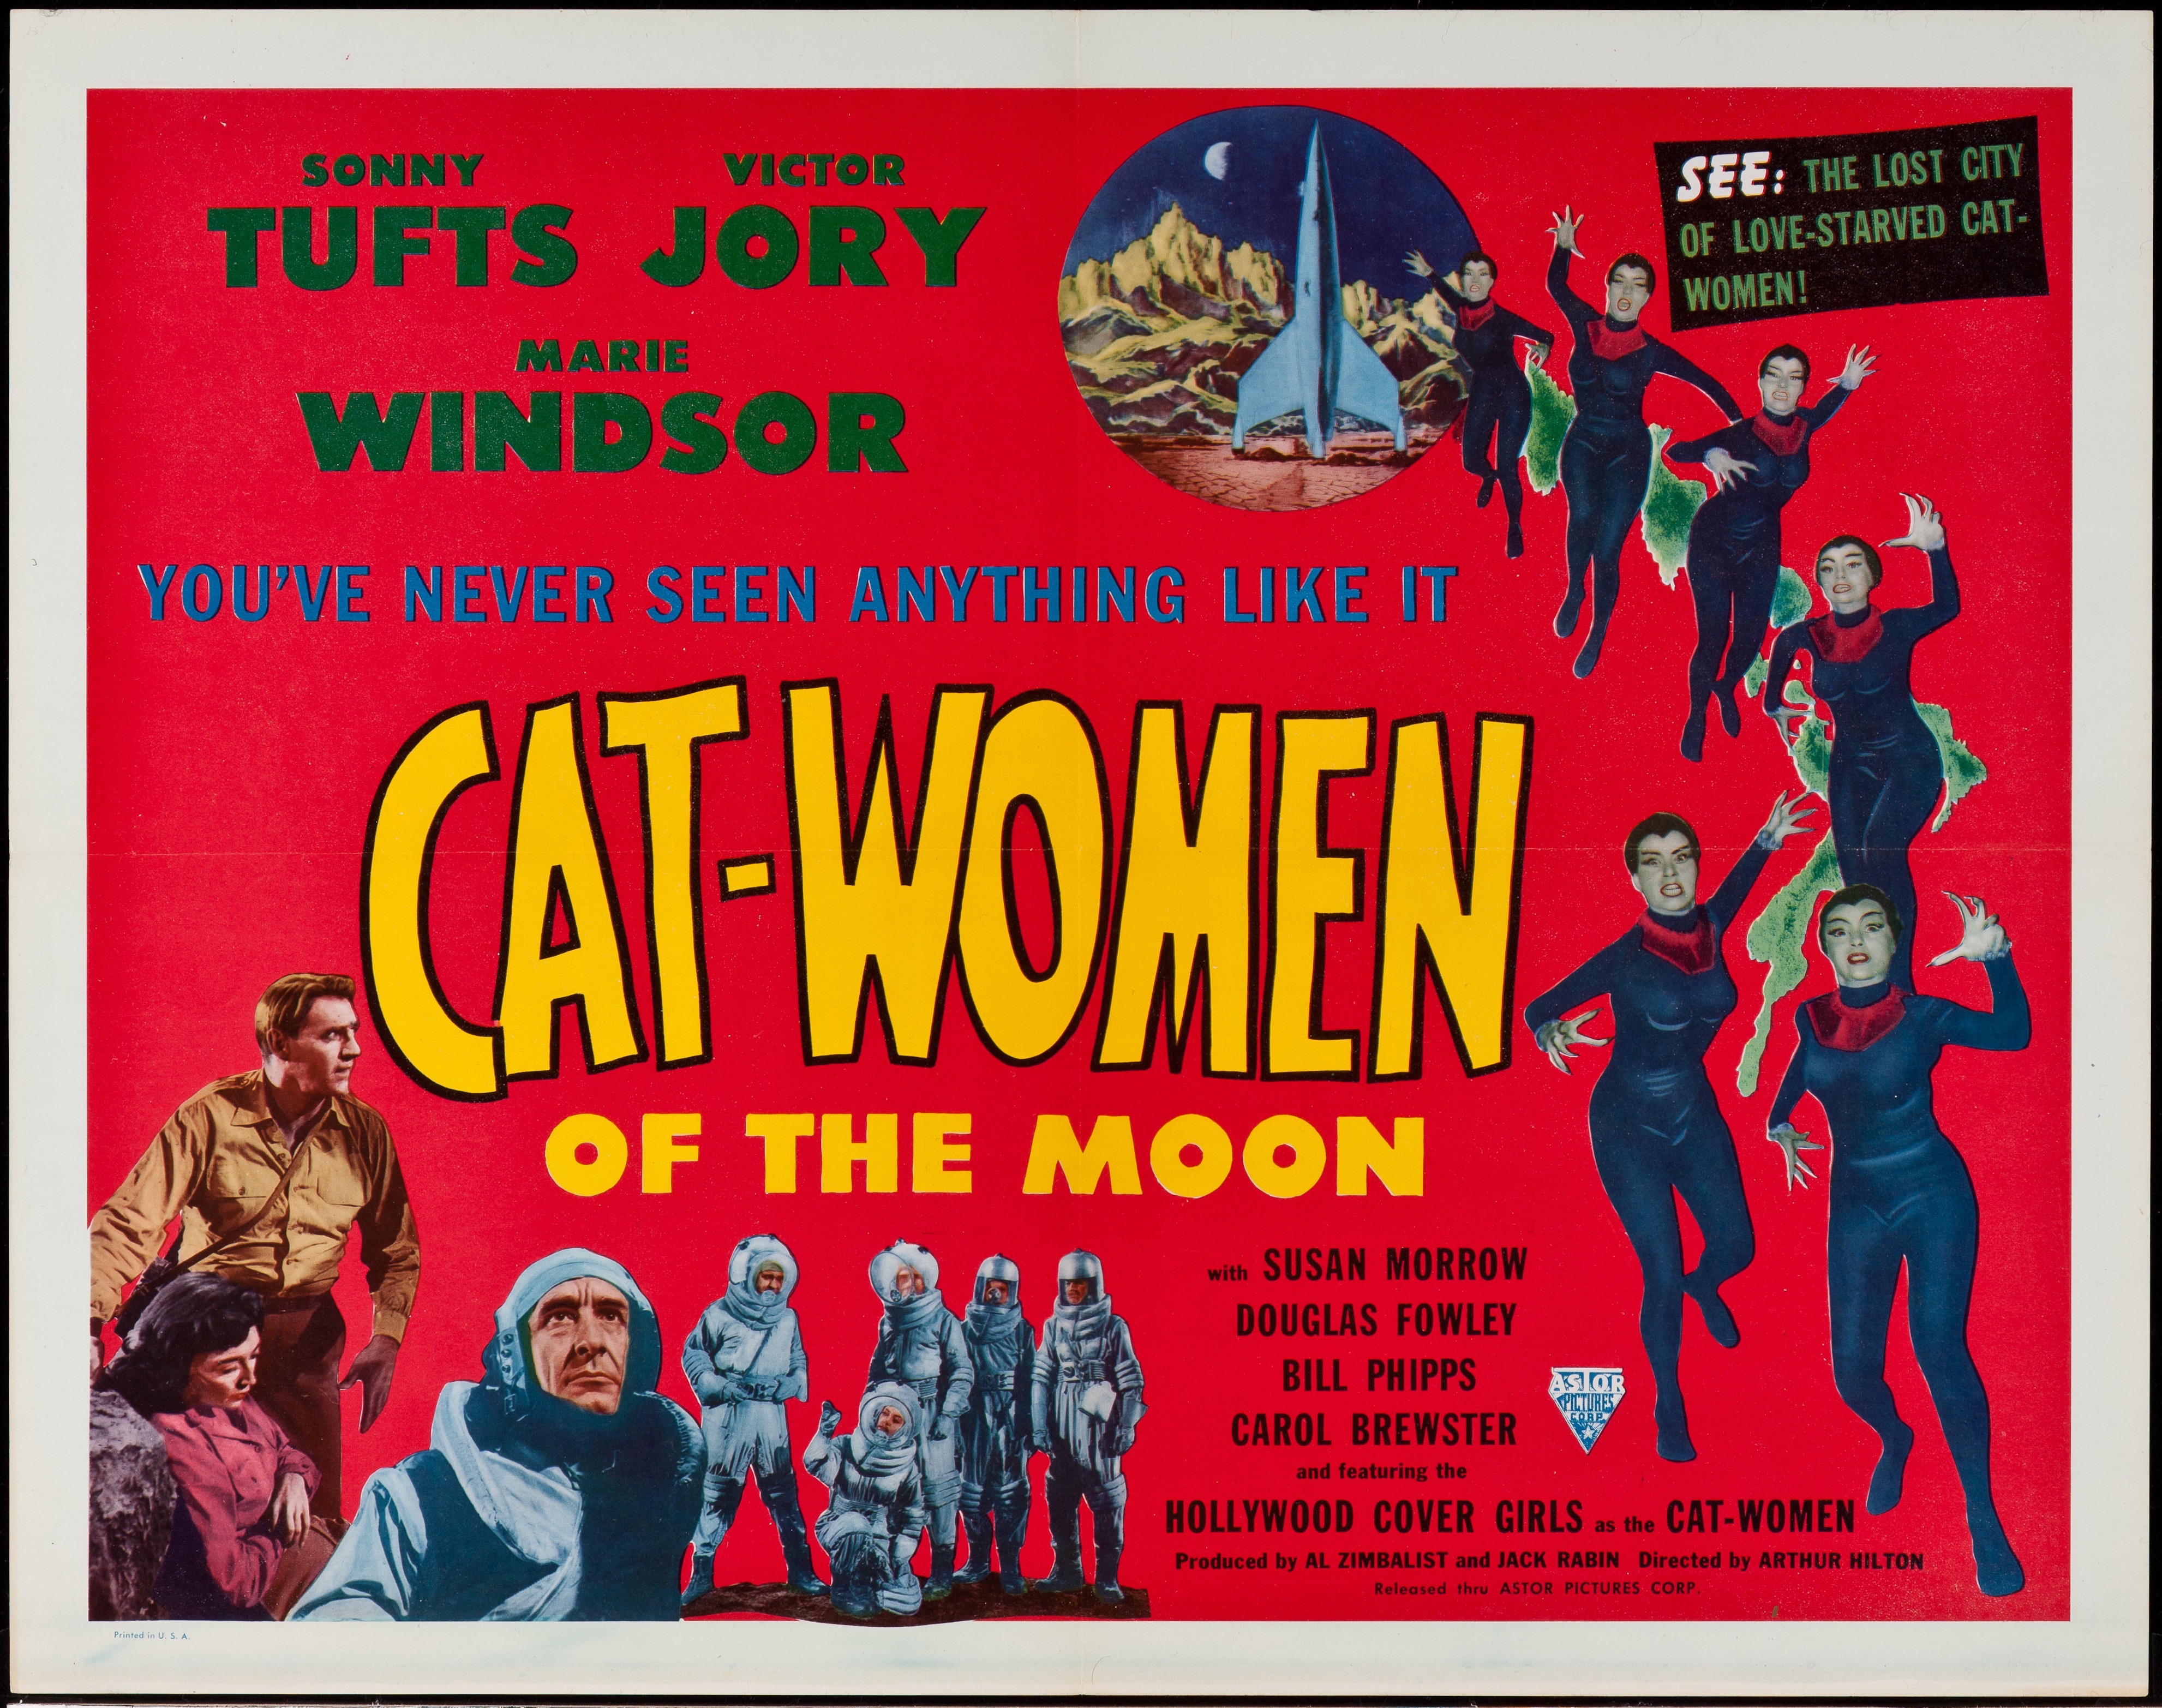 Cat-women Of The Moon 1954 - Primary